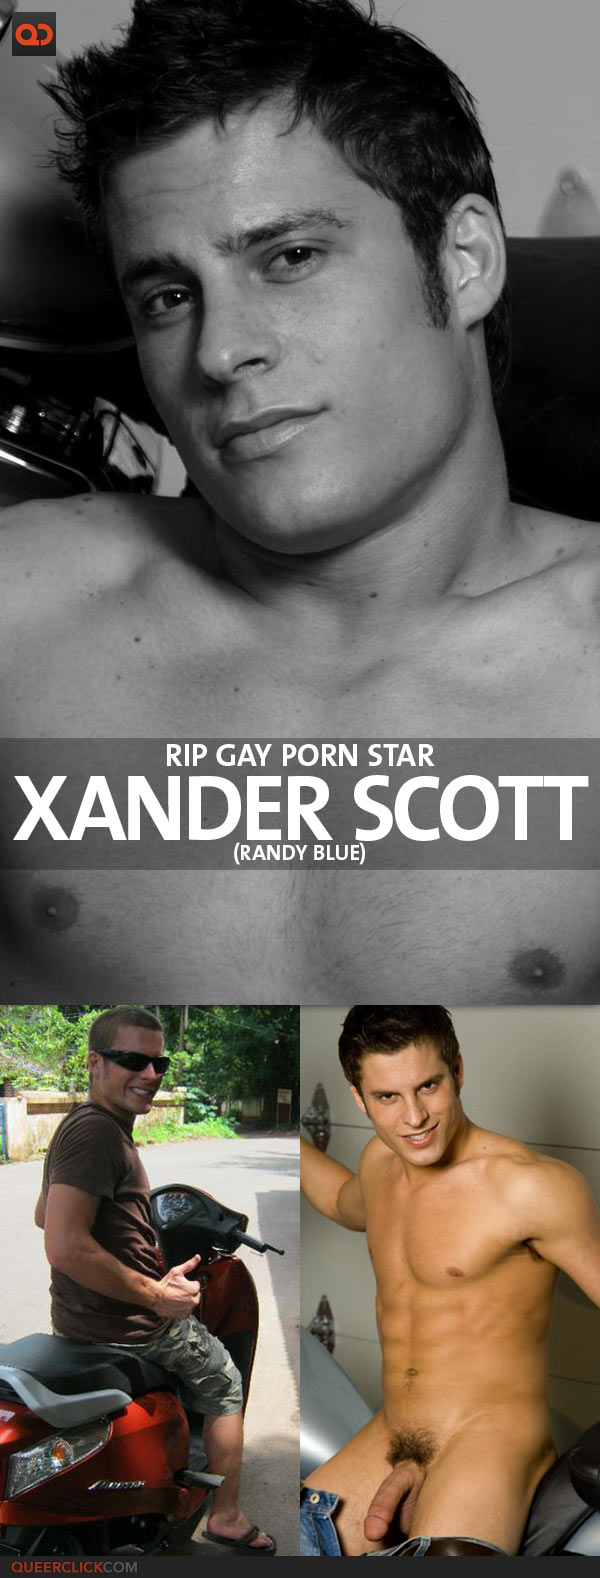 Blue Gay Porn Star - RIP Gay Porn Star Xander Scott - Randy Blue Performer - QueerClick